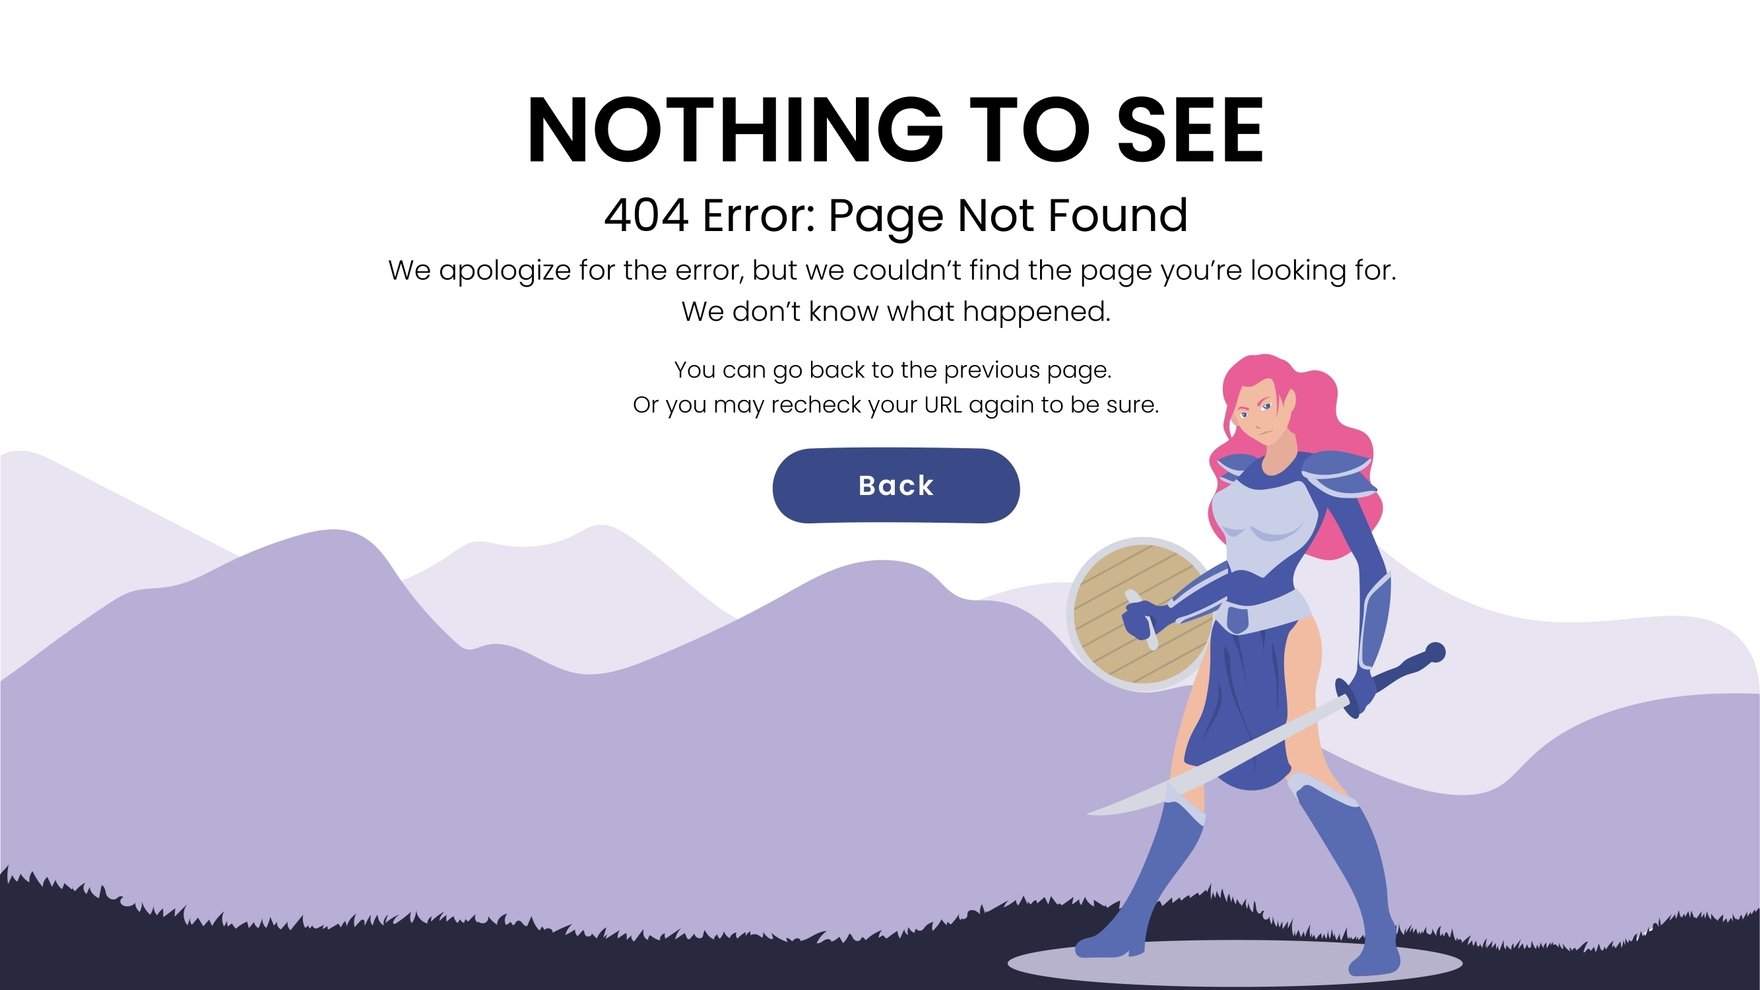 Design 404 Error Page